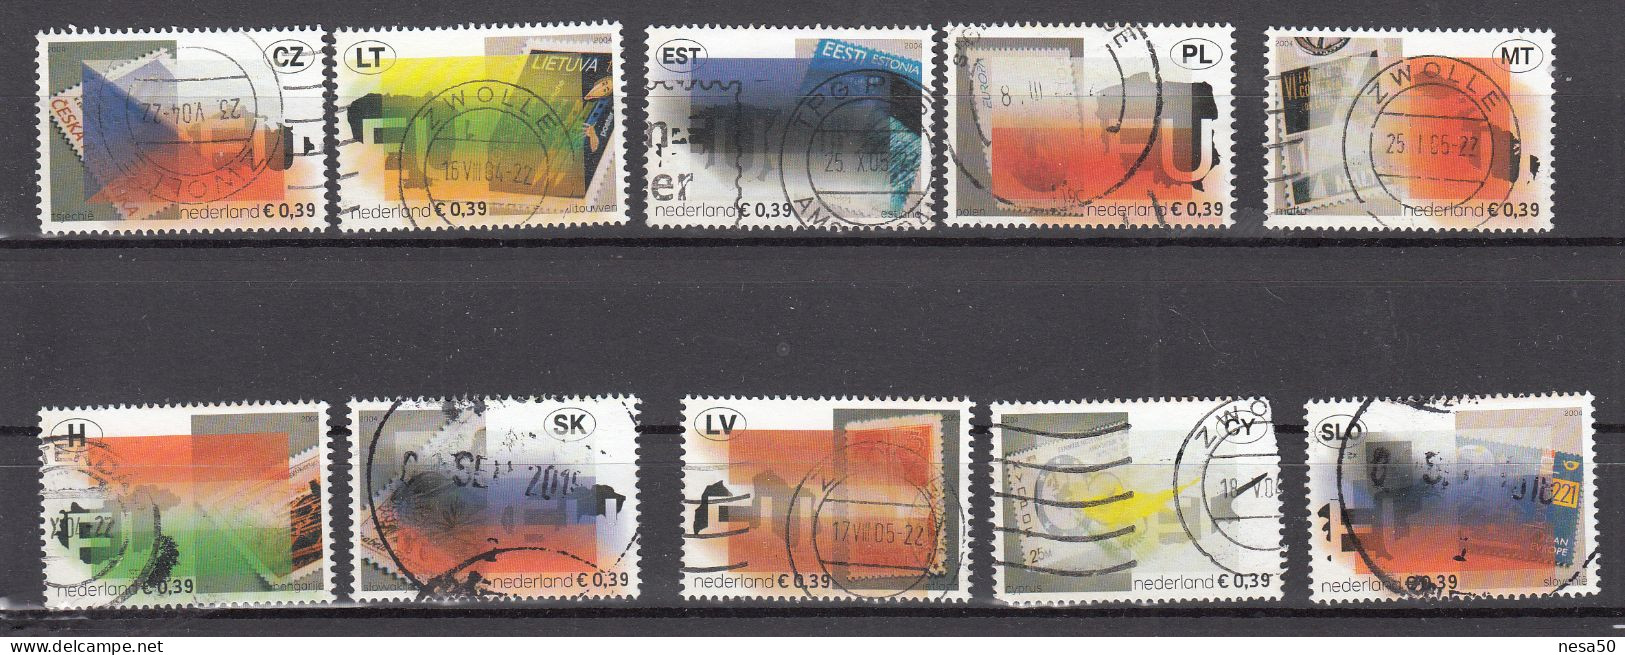 Nederland 2004 NVPH Nr 2260 - 2269 ,  Mi Nr 2205 - 2214 ; Uitbreiding Europese Unie - Gebruikt